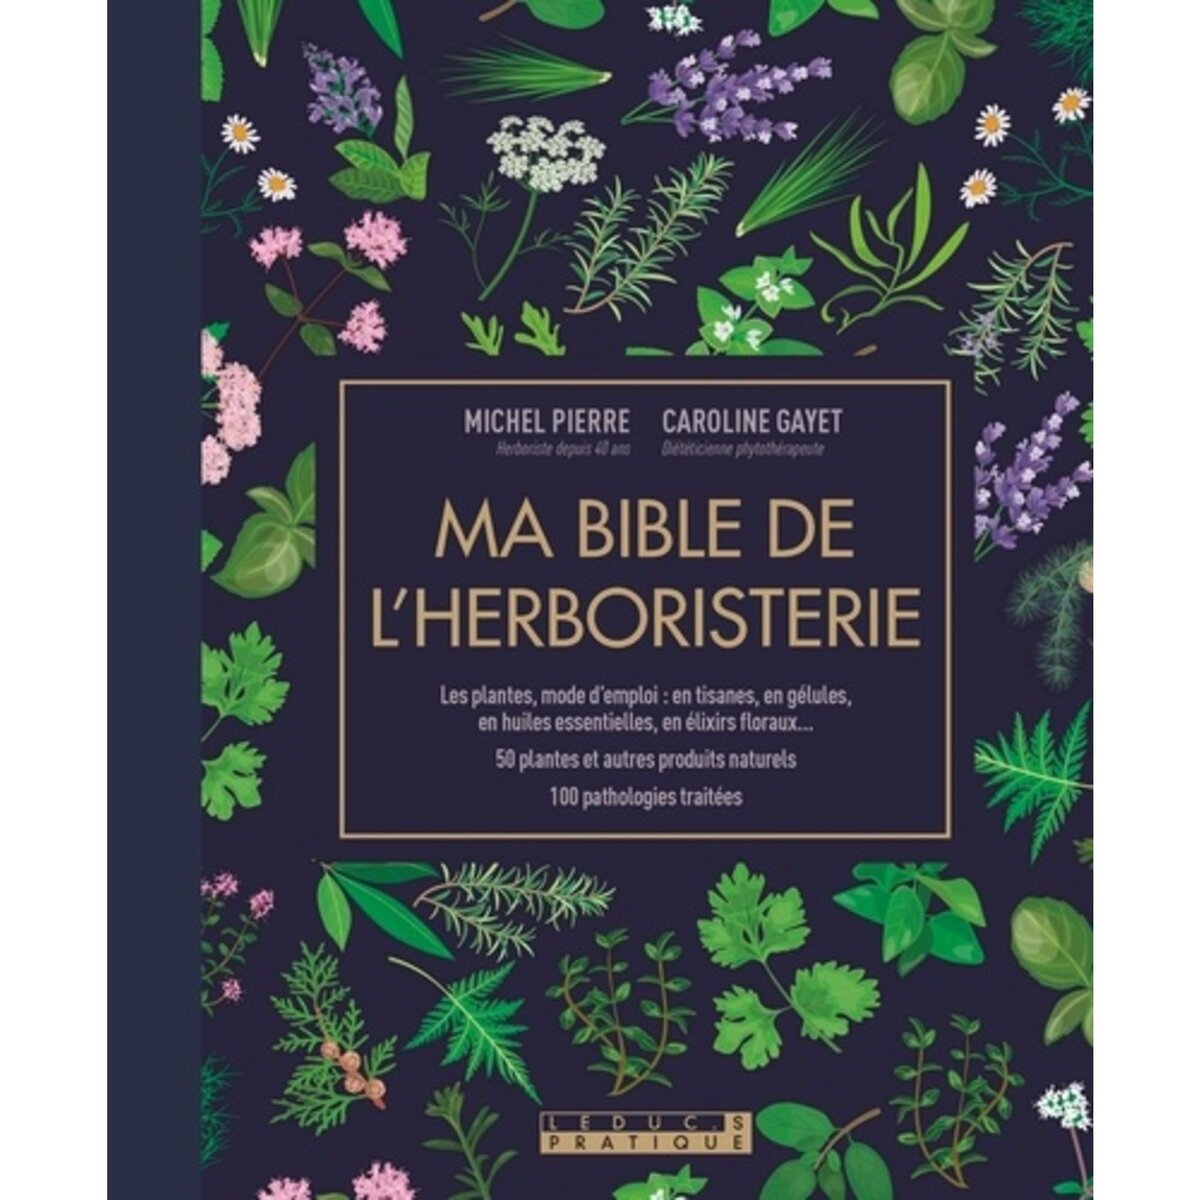  MA BIBLE DE L'HERBORISTERIE, Pierre Michel